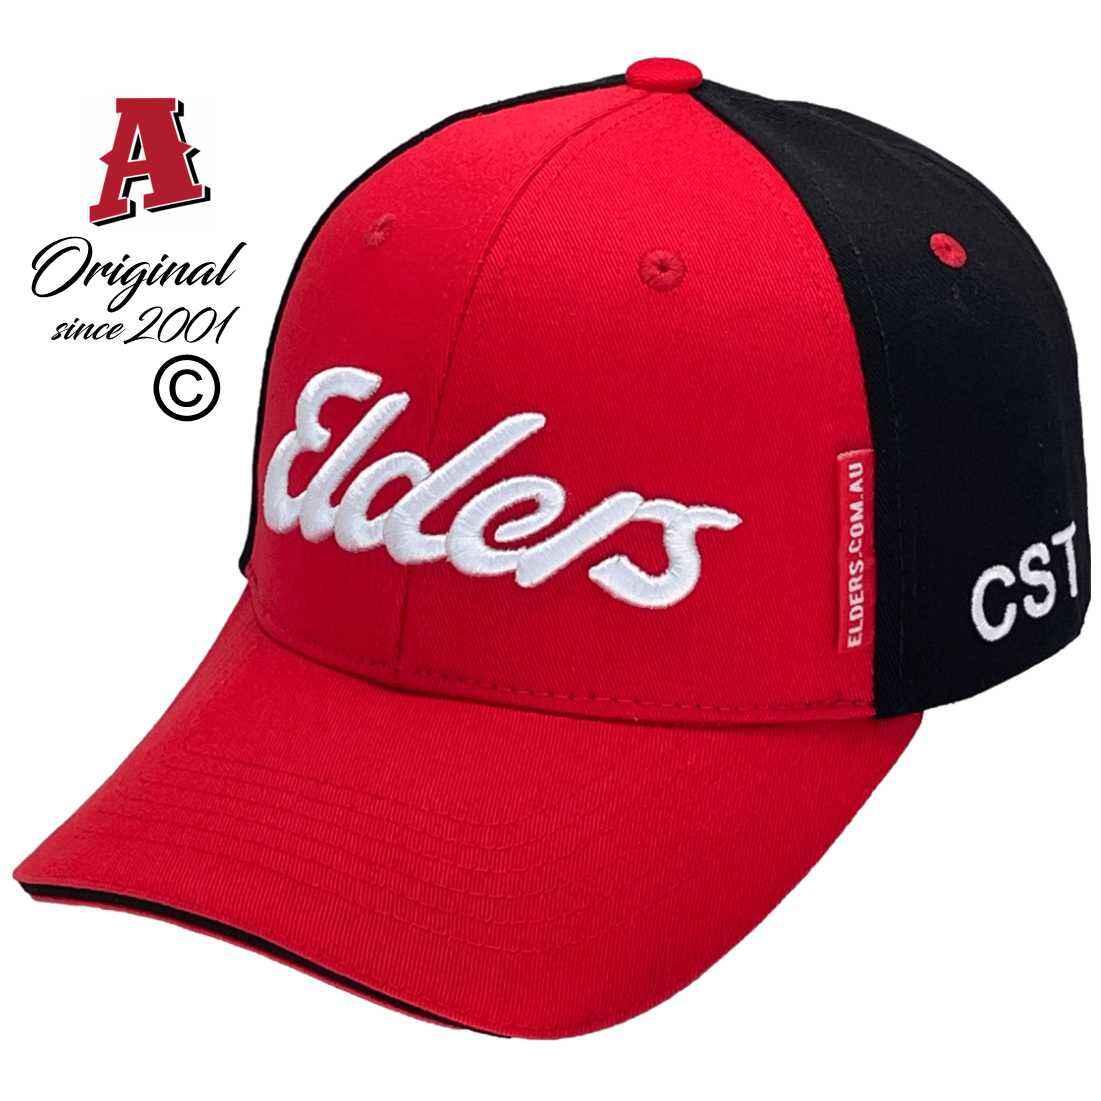 Elders Toowoomba Qld Aussie Custom Baseball Hat with Australian HeadFit Crown and Sandwich Brim